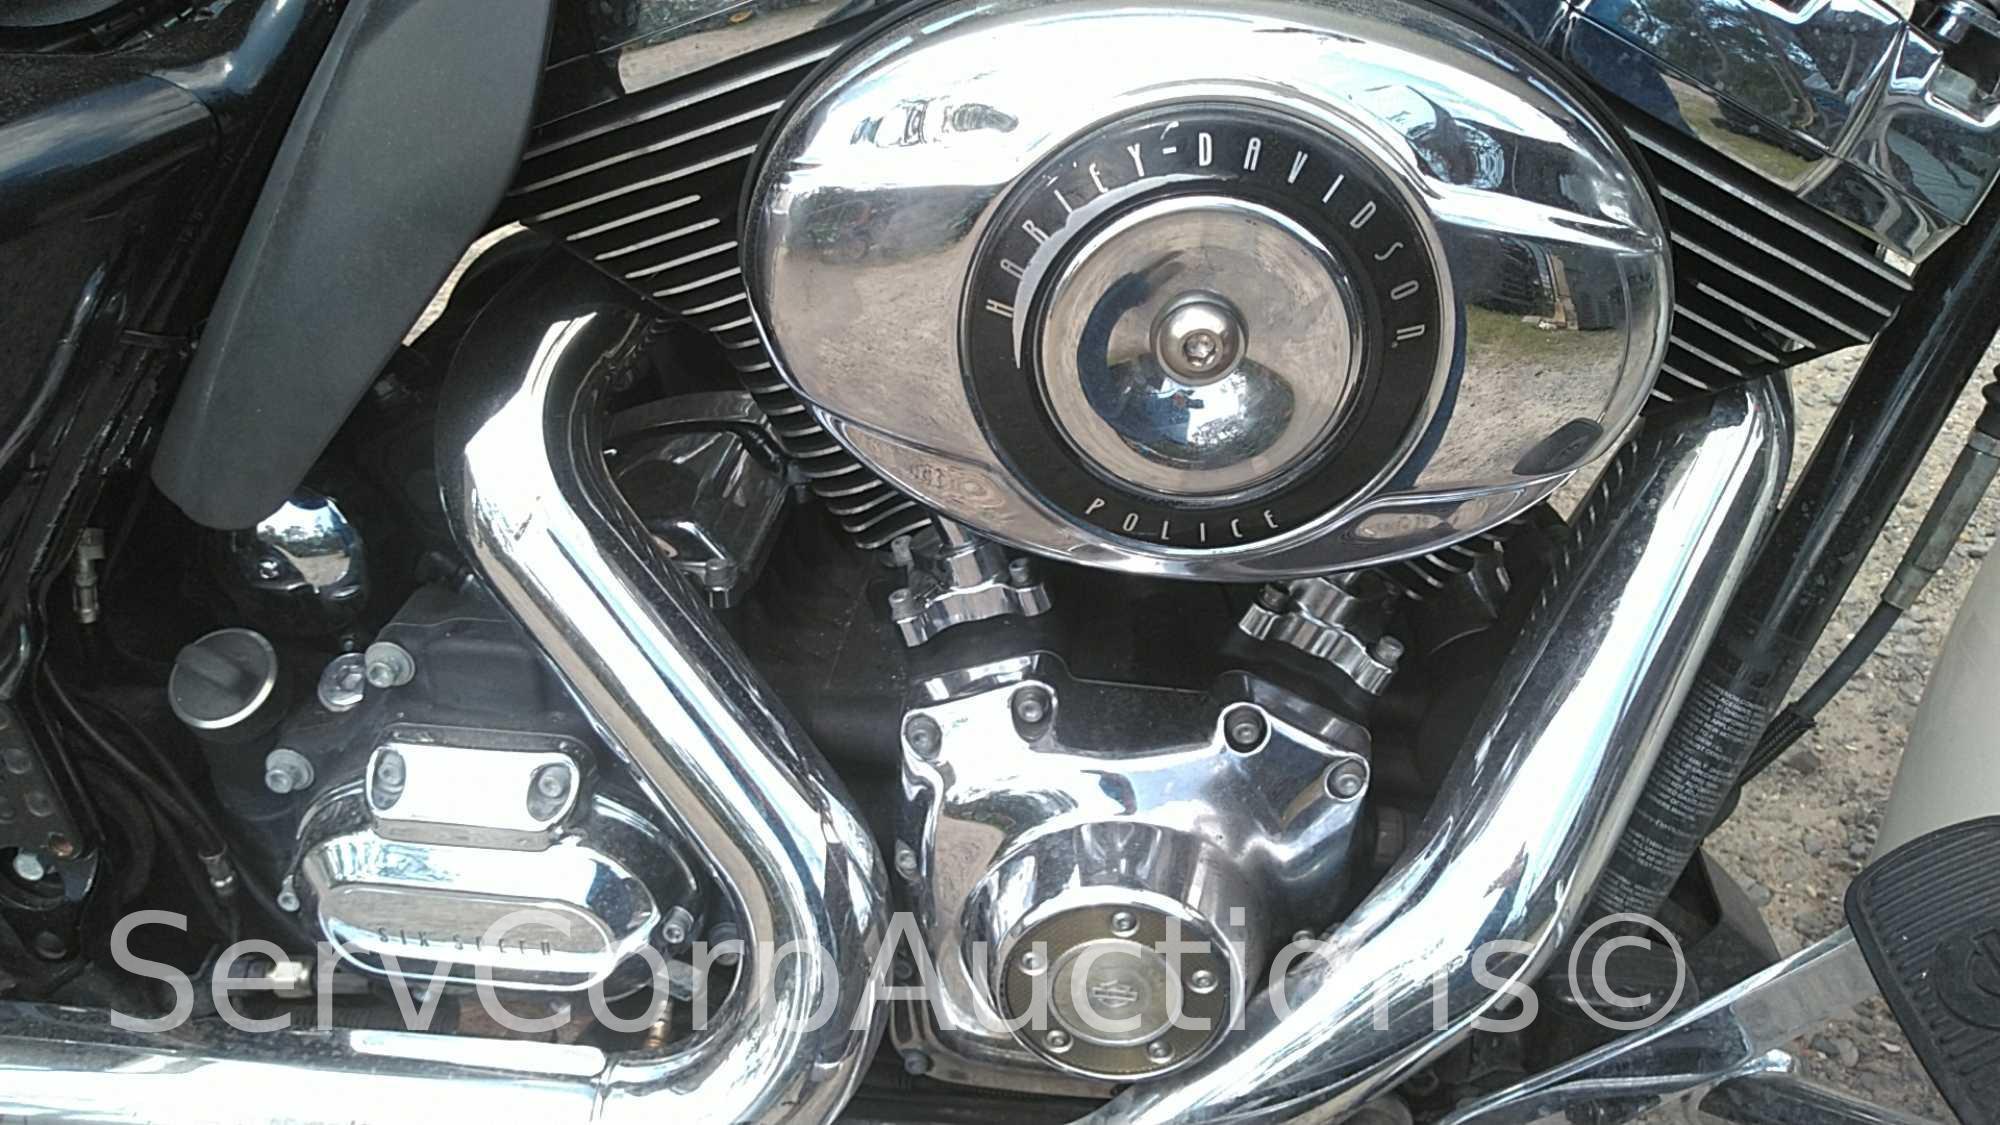 2013 Harley-Davidson FLHP Motorcycle, VIN # 1HD1FHM19DB686973